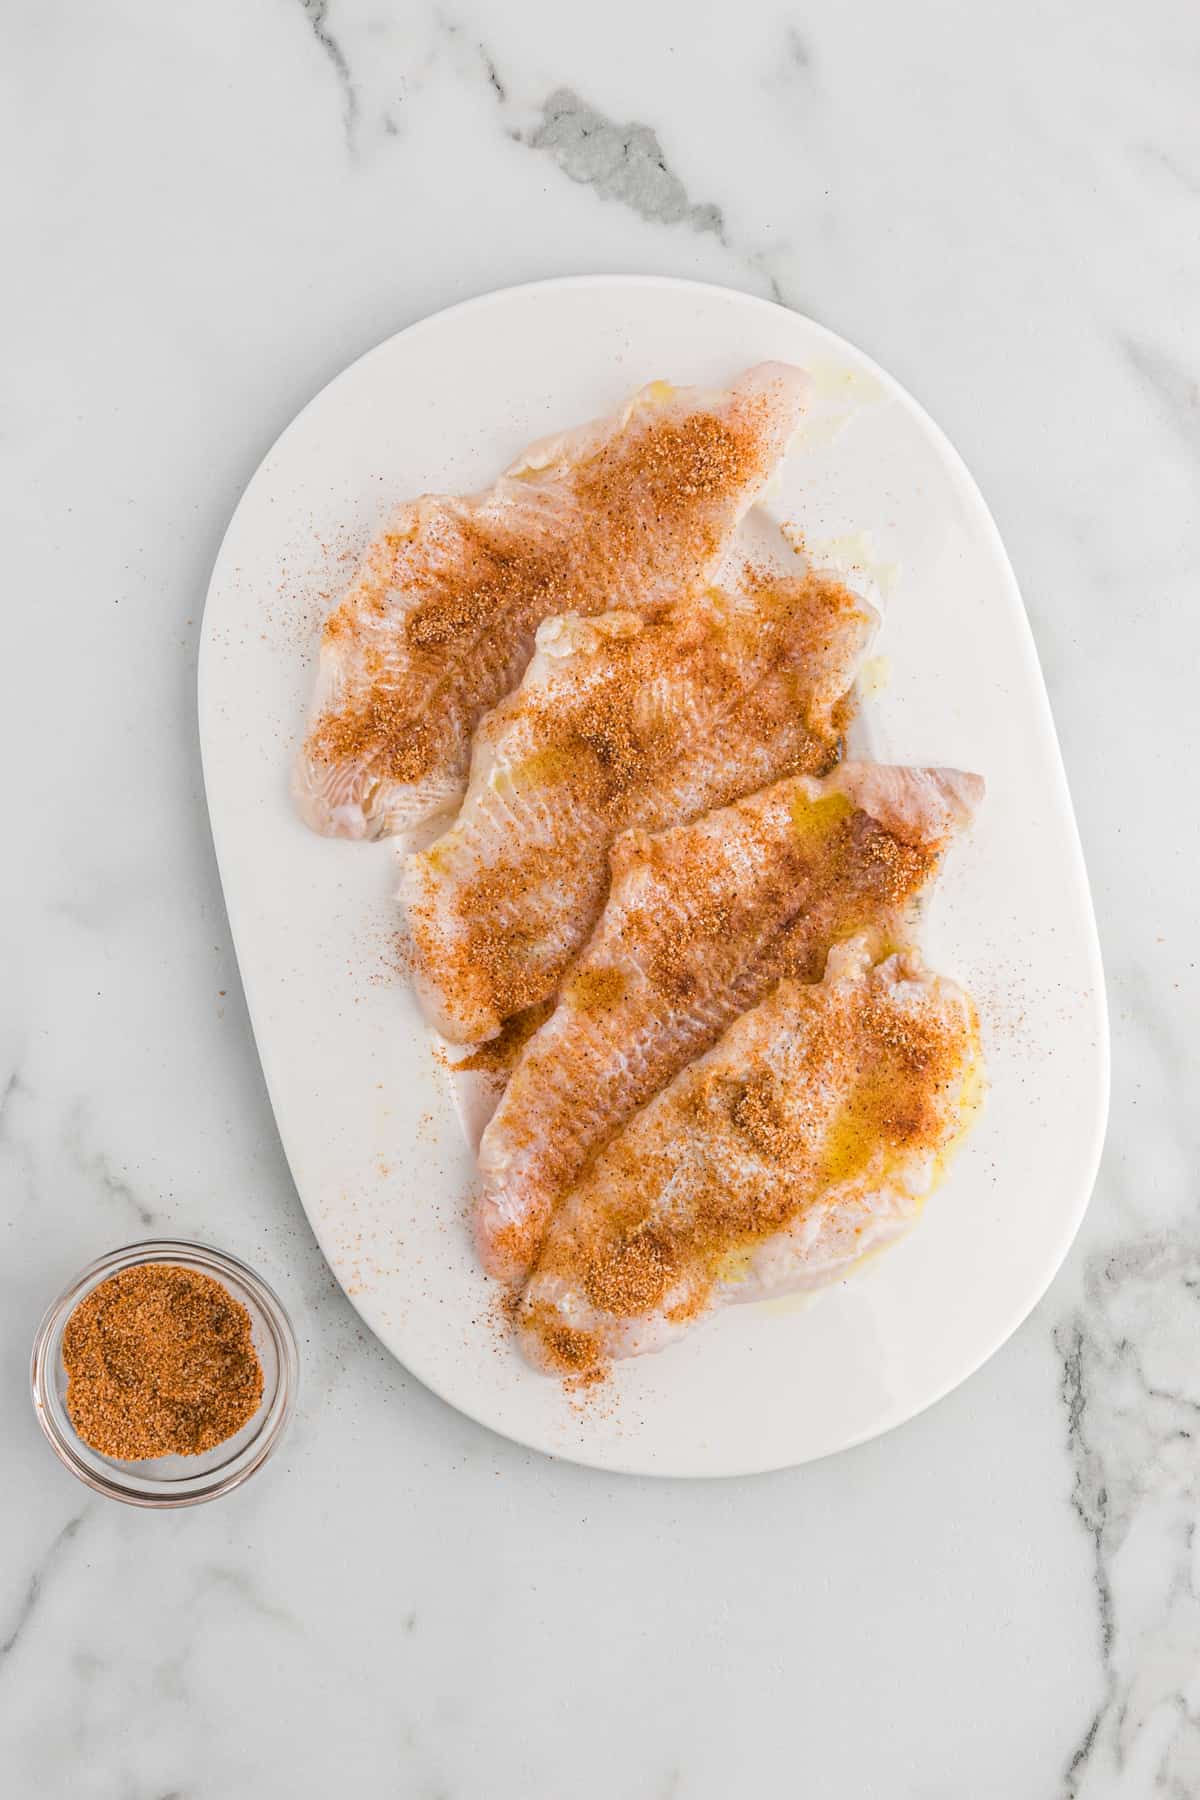 Raw seasoned catfish fillets on a white platter.